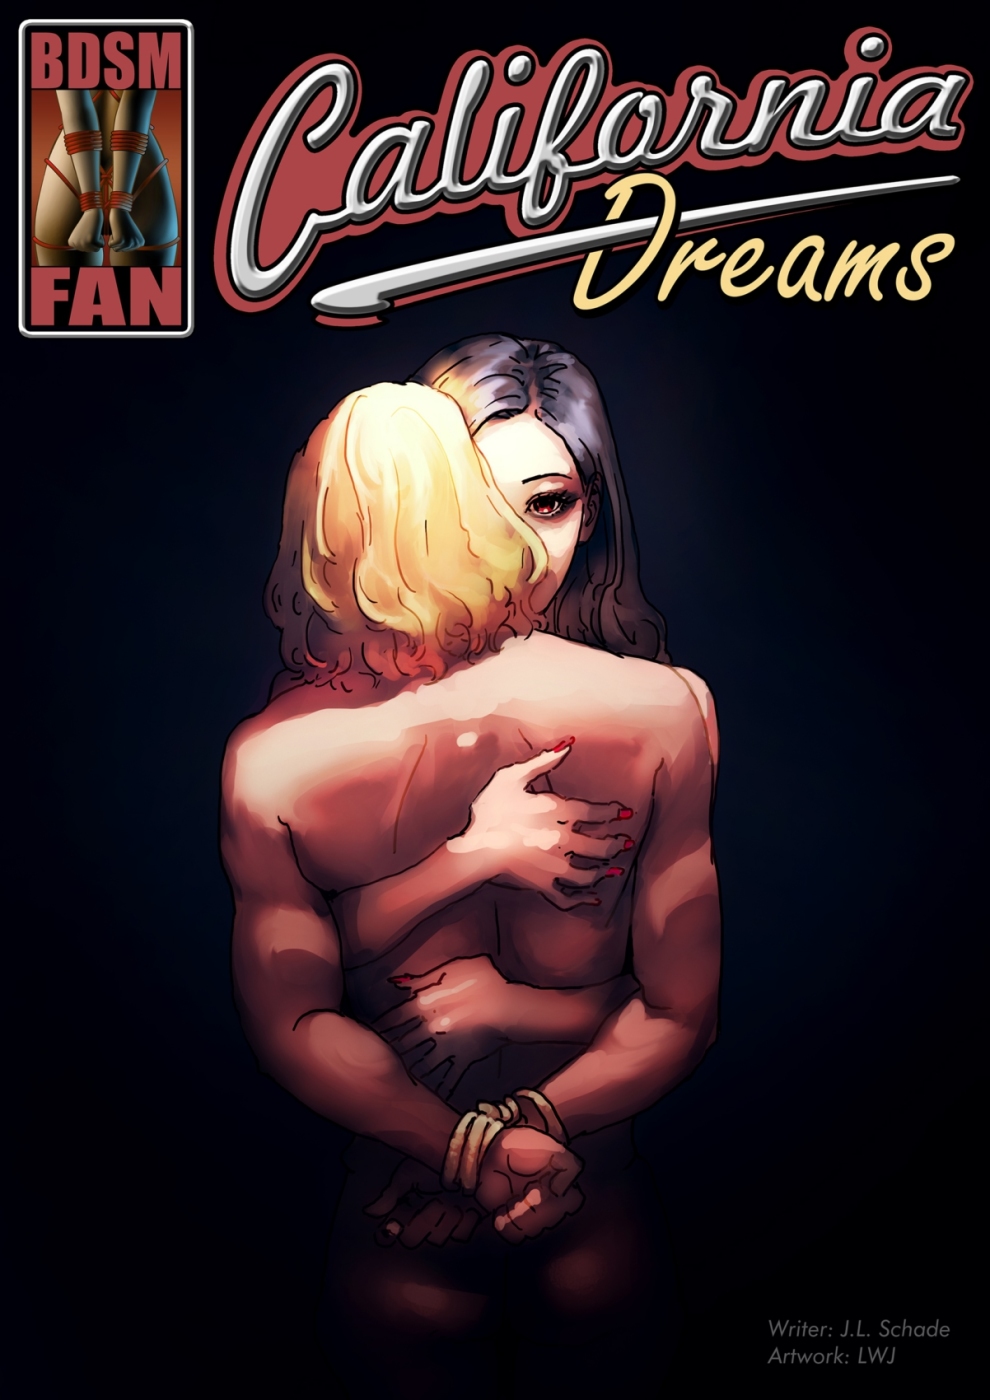 BDSM Fan California Dreams Porn Comic